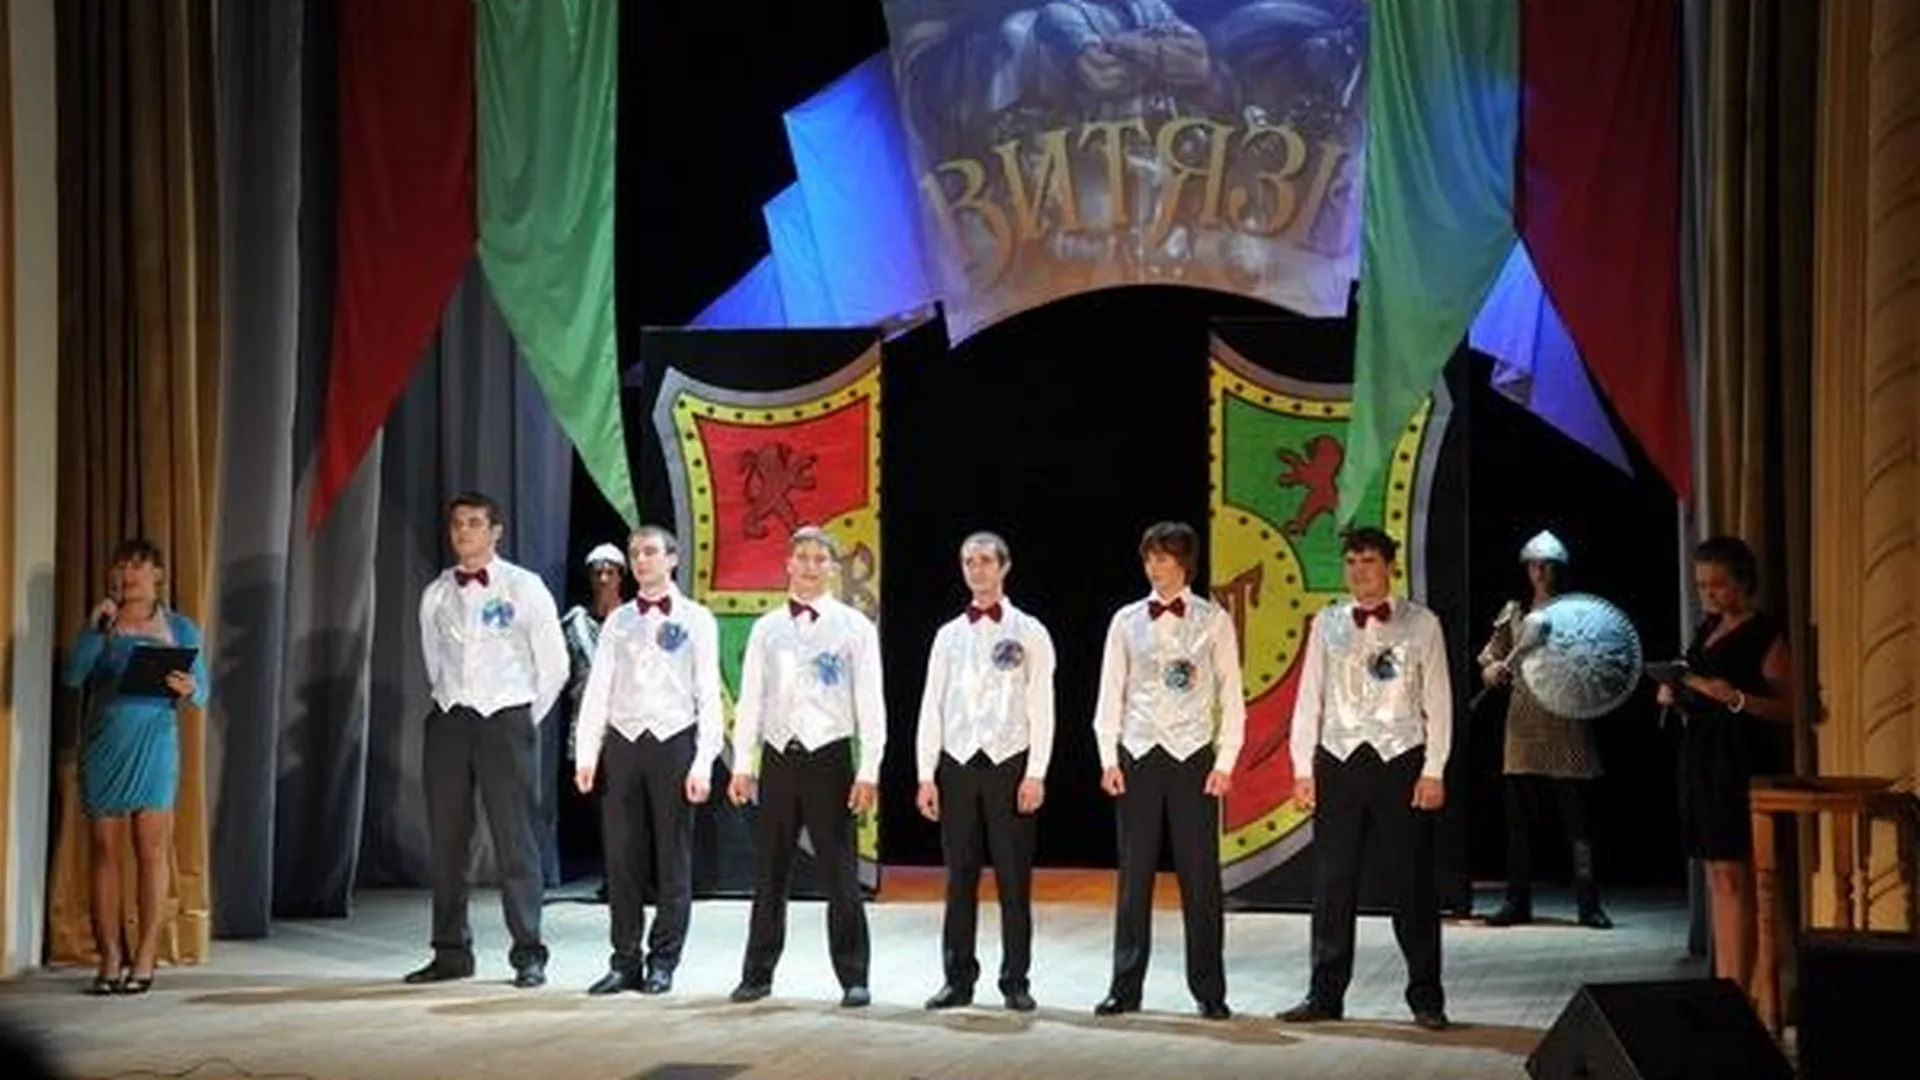 Шоу-конкурс «Витязи-2014» пройдет в Талдомском районе